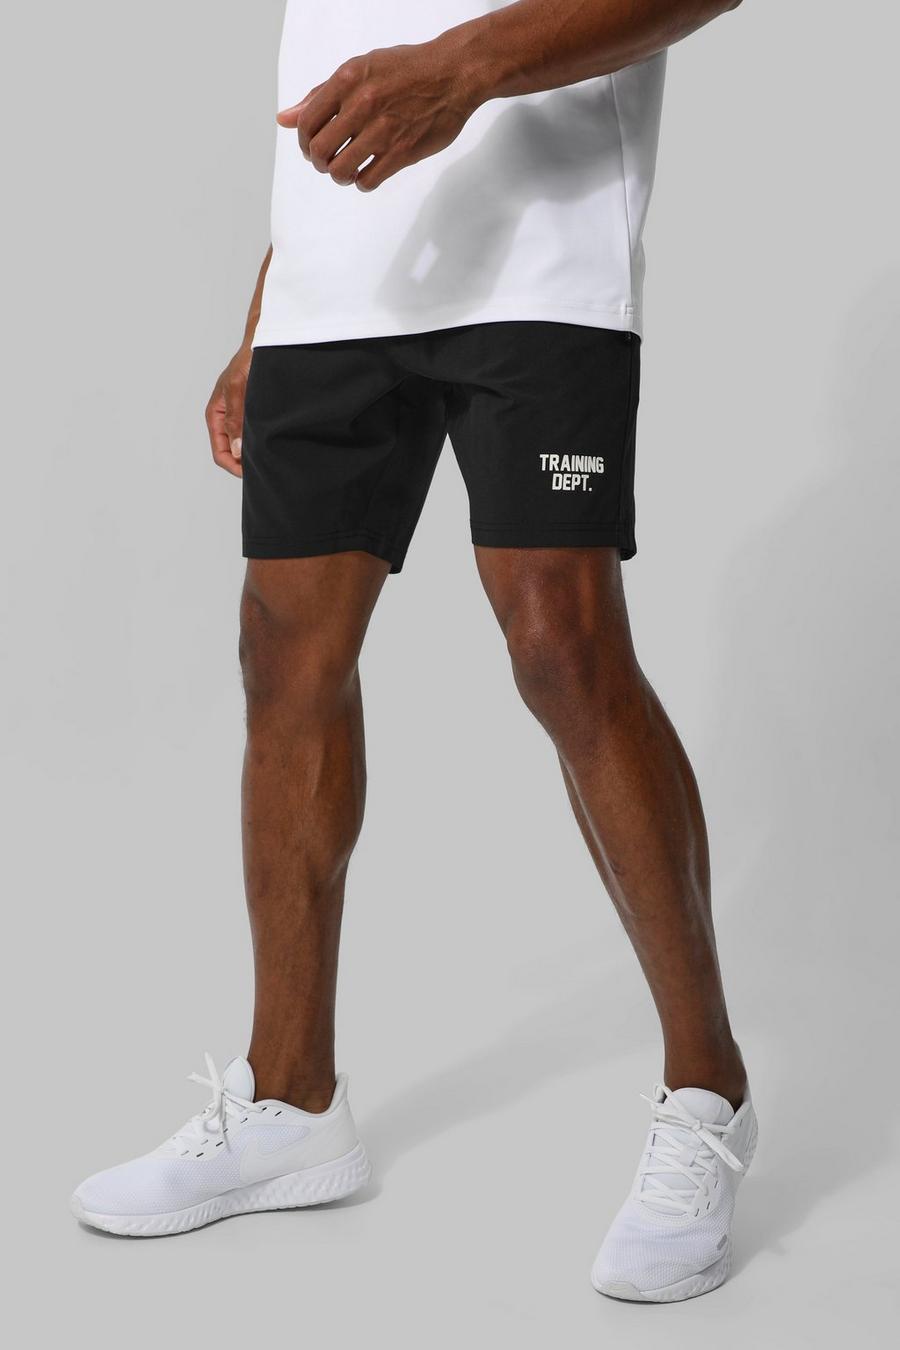 Black Man Active Performance Training Dept 5inch Shorts